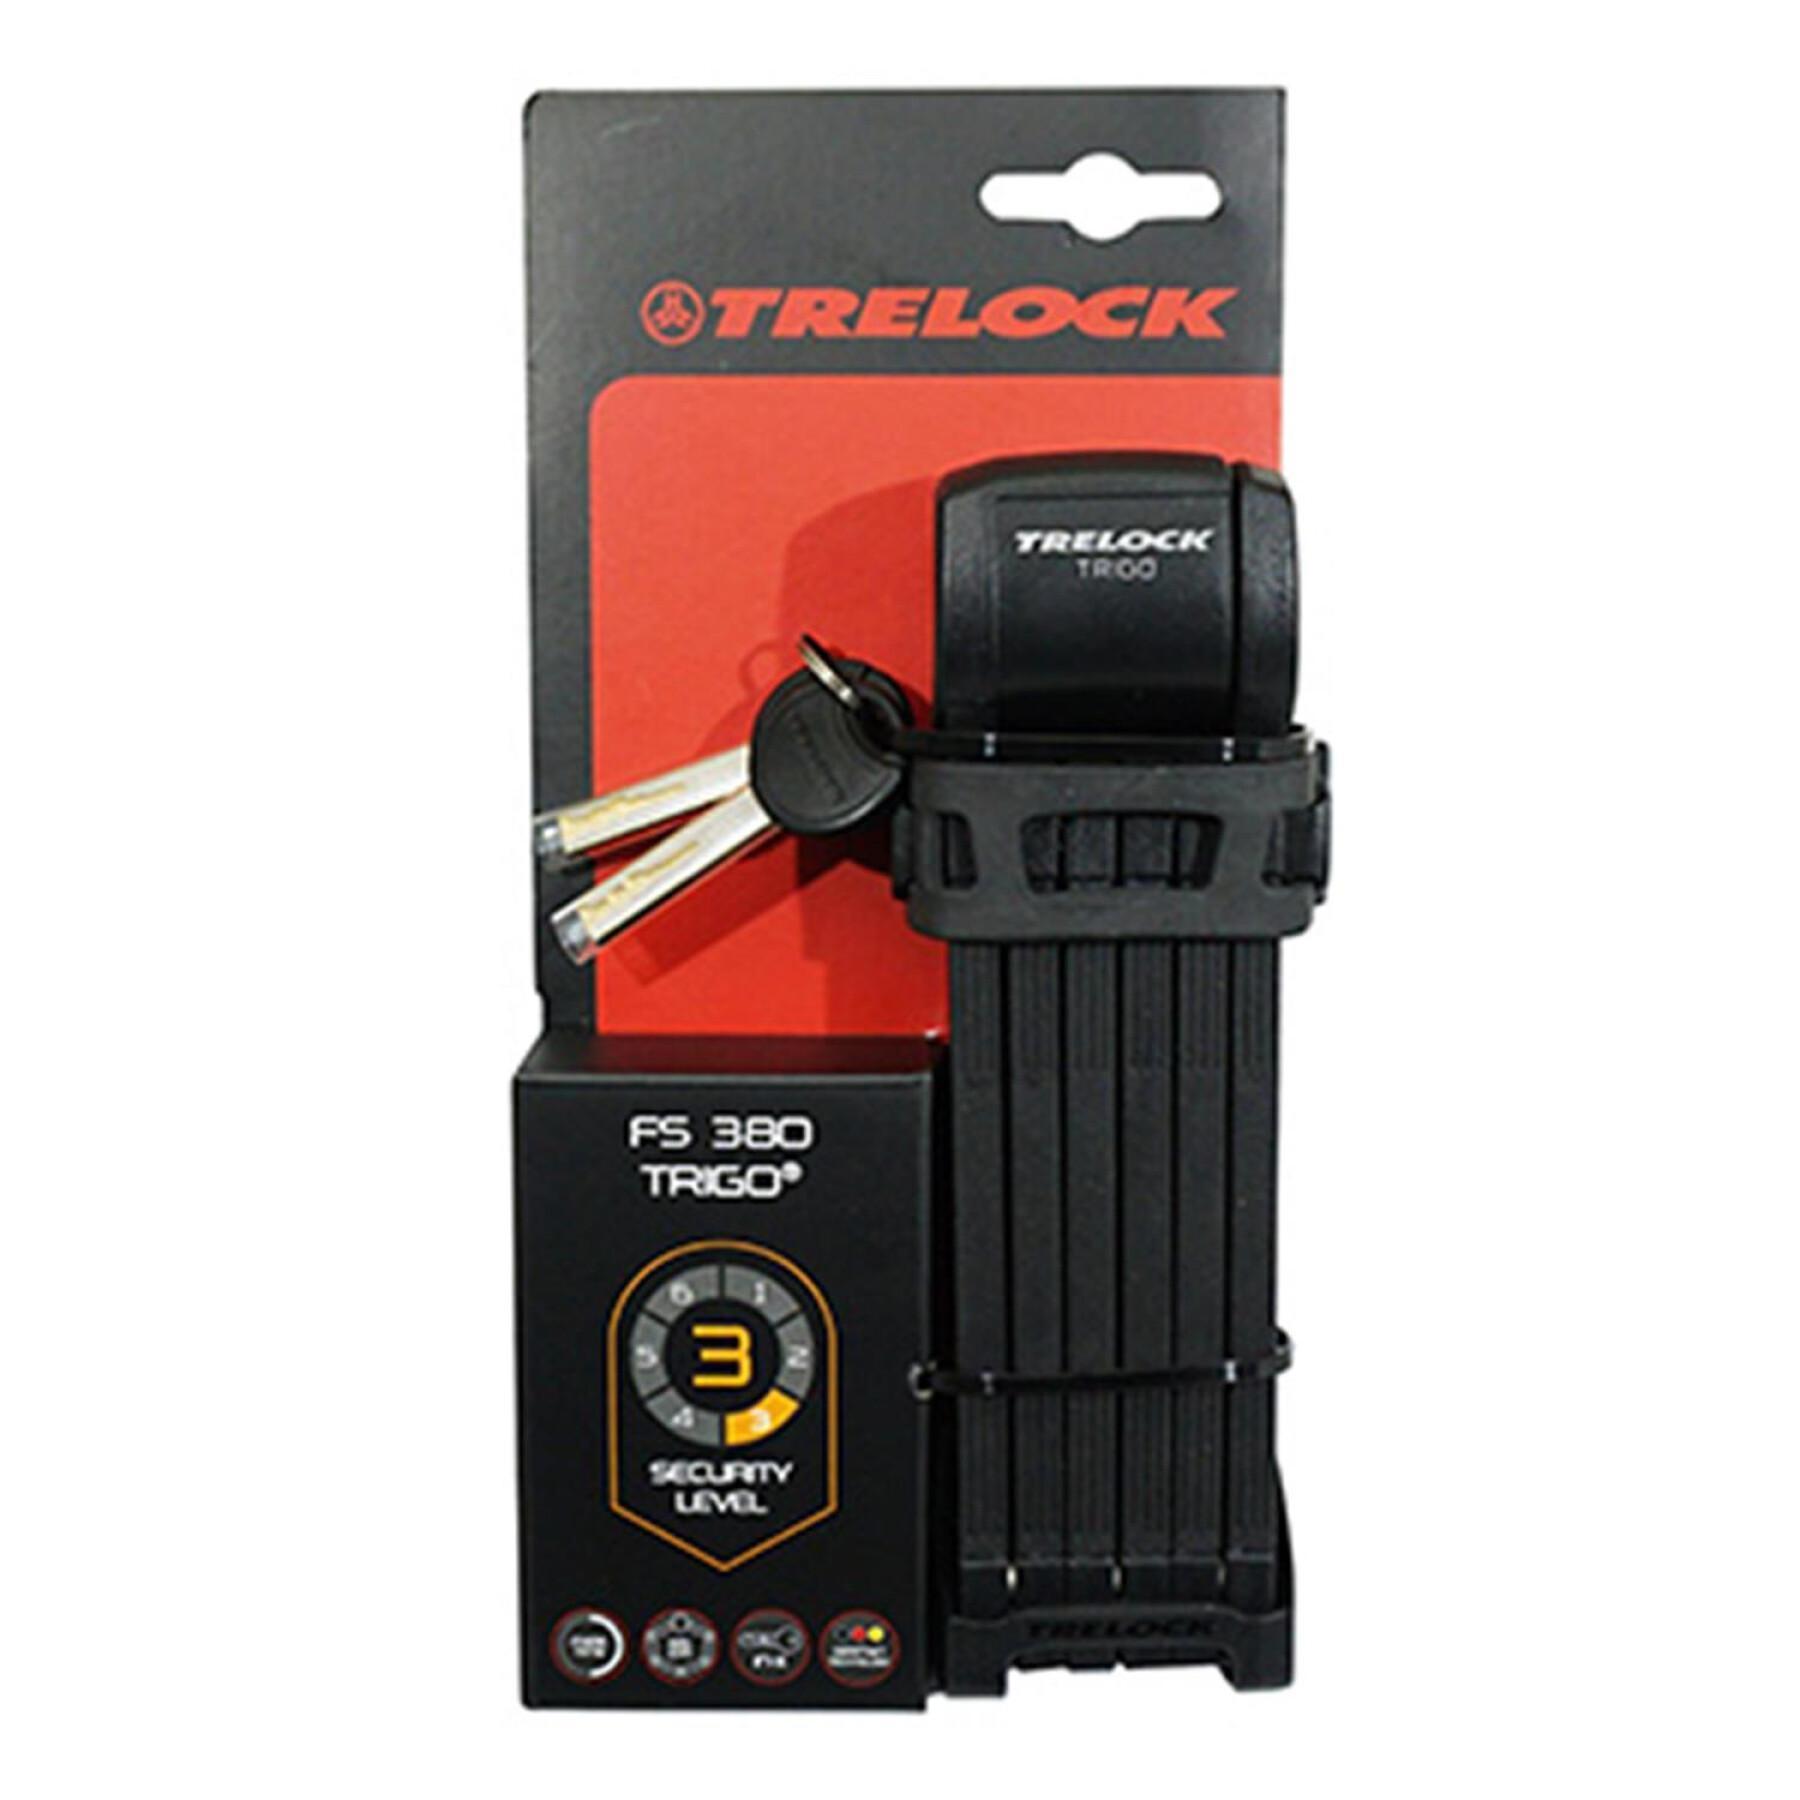 Antivol pliable souple Trelock Trigo + support FS300 85 cm